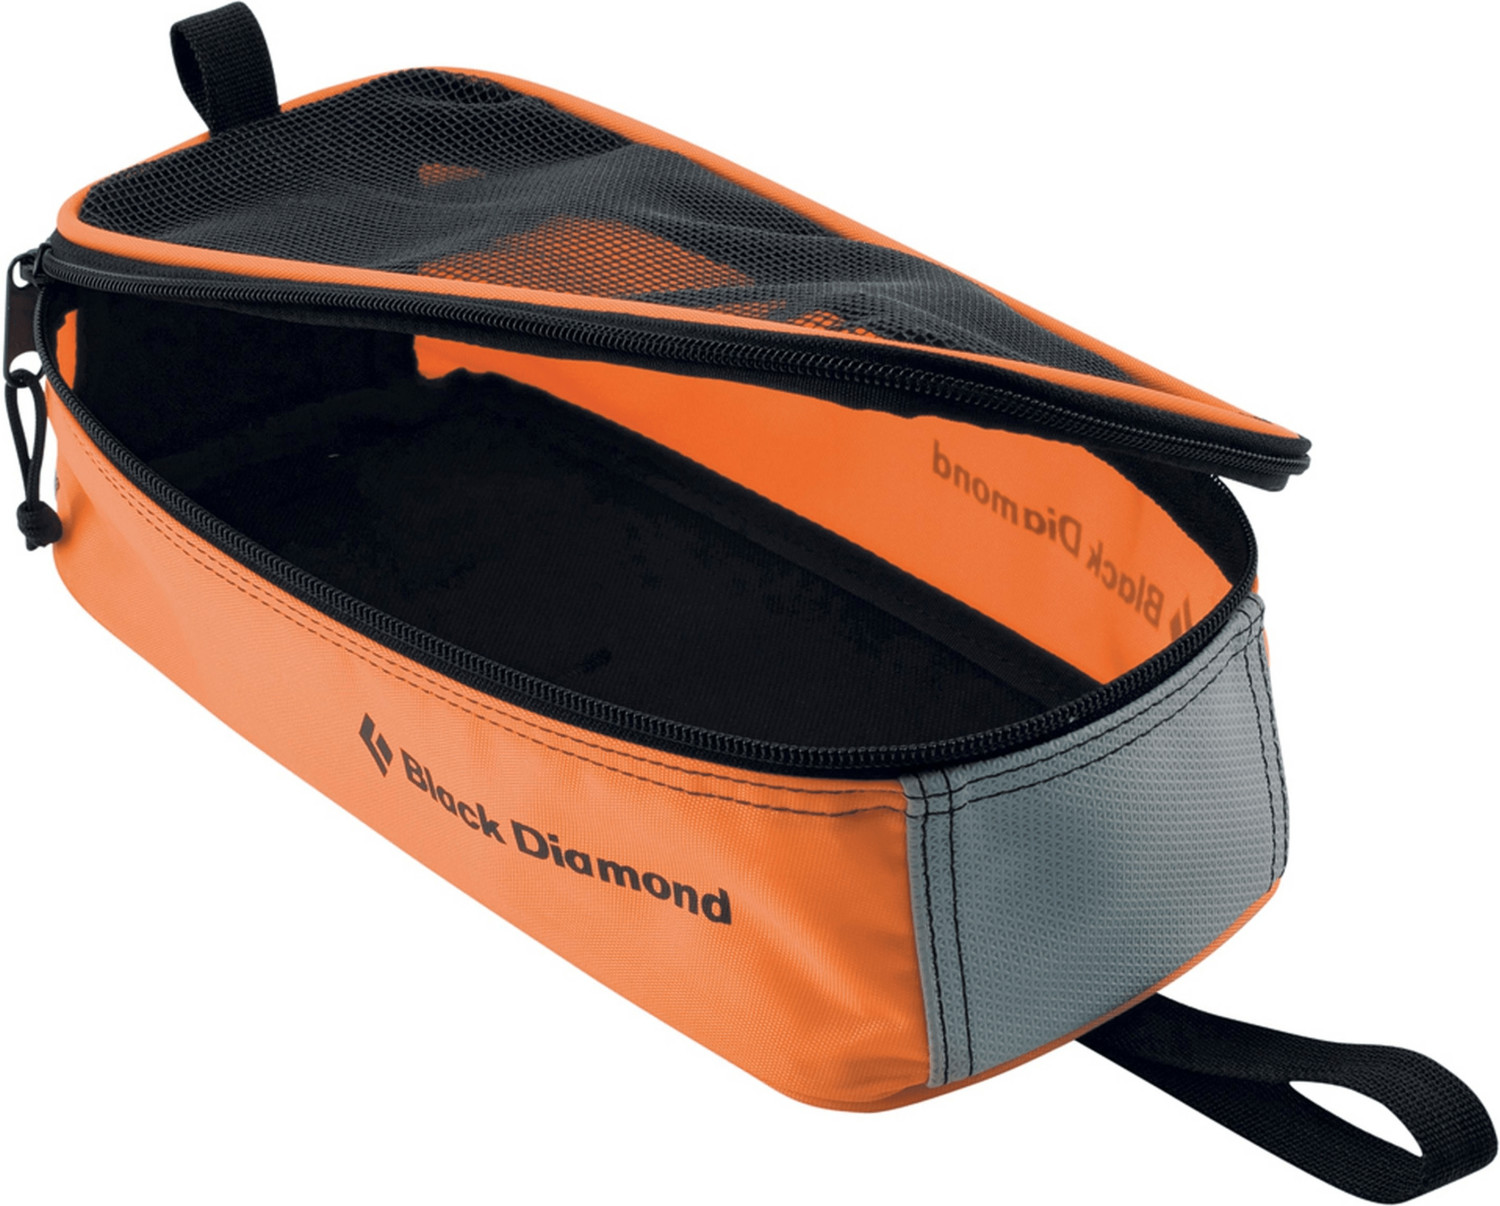 Photos - Climbing Gear Black Diamond Equipment Crampon Bag 